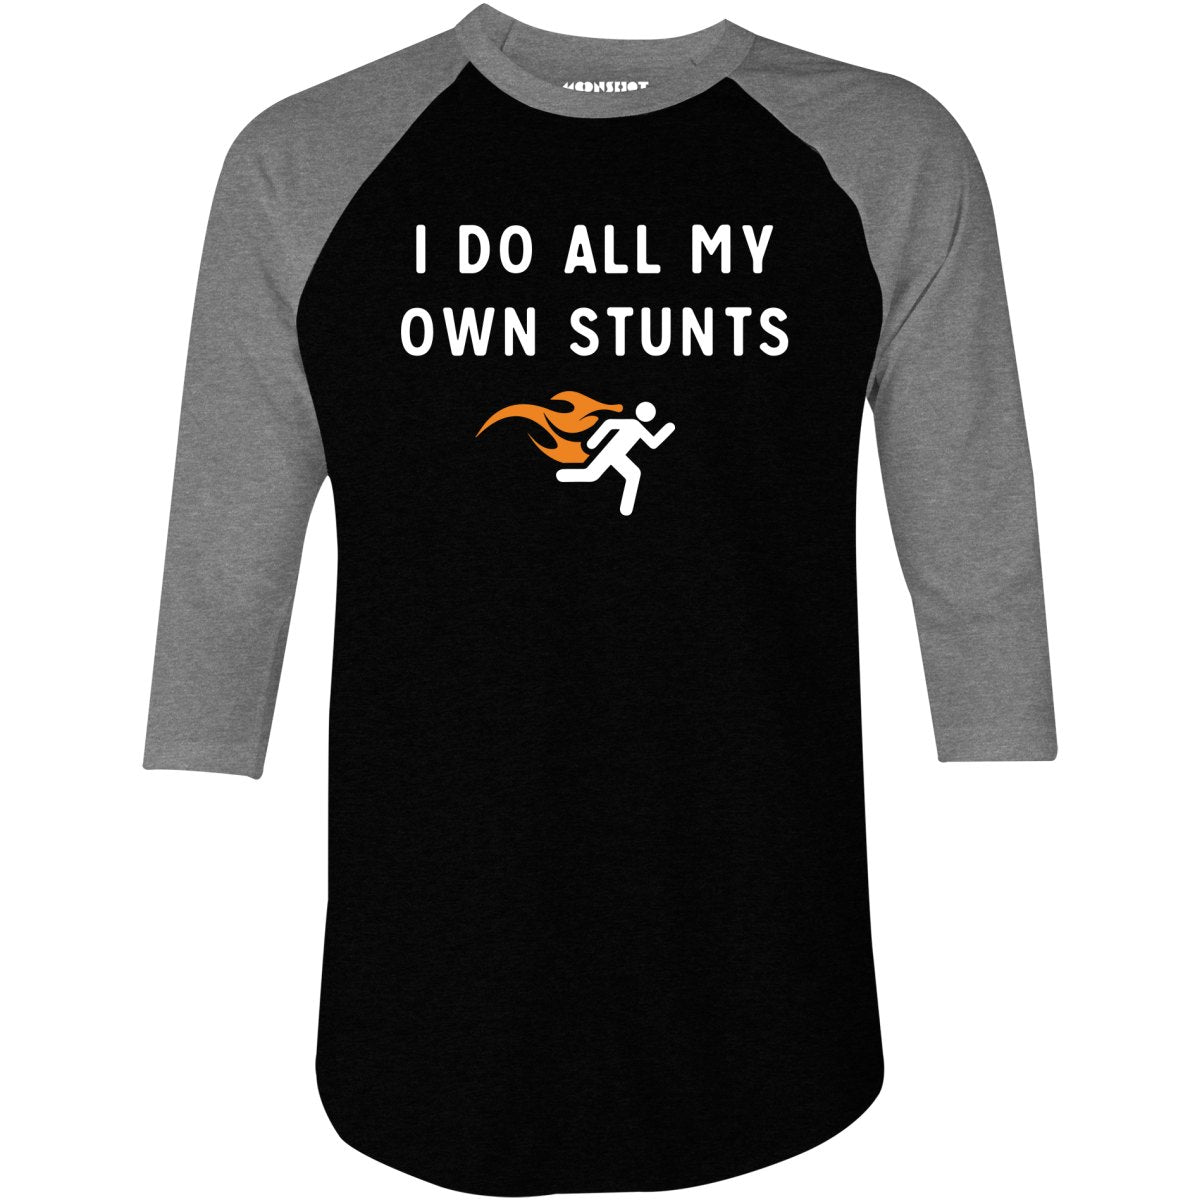 I Do All My Own Stunts - 3/4 Sleeve Raglan T-Shirt